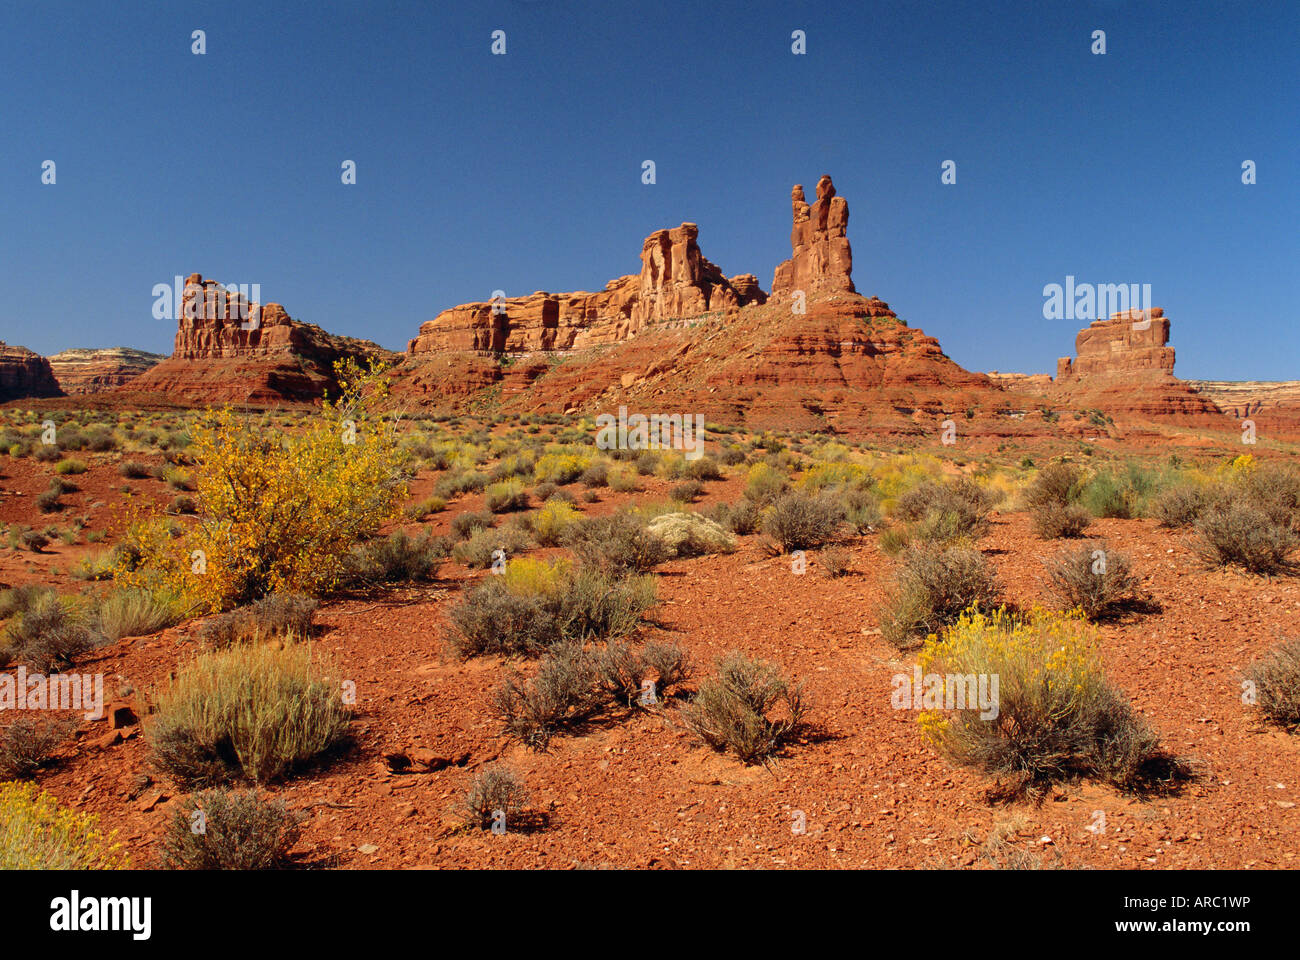 Sandstein Monolithen, Tal der Götter, Utah, USA Stockfoto